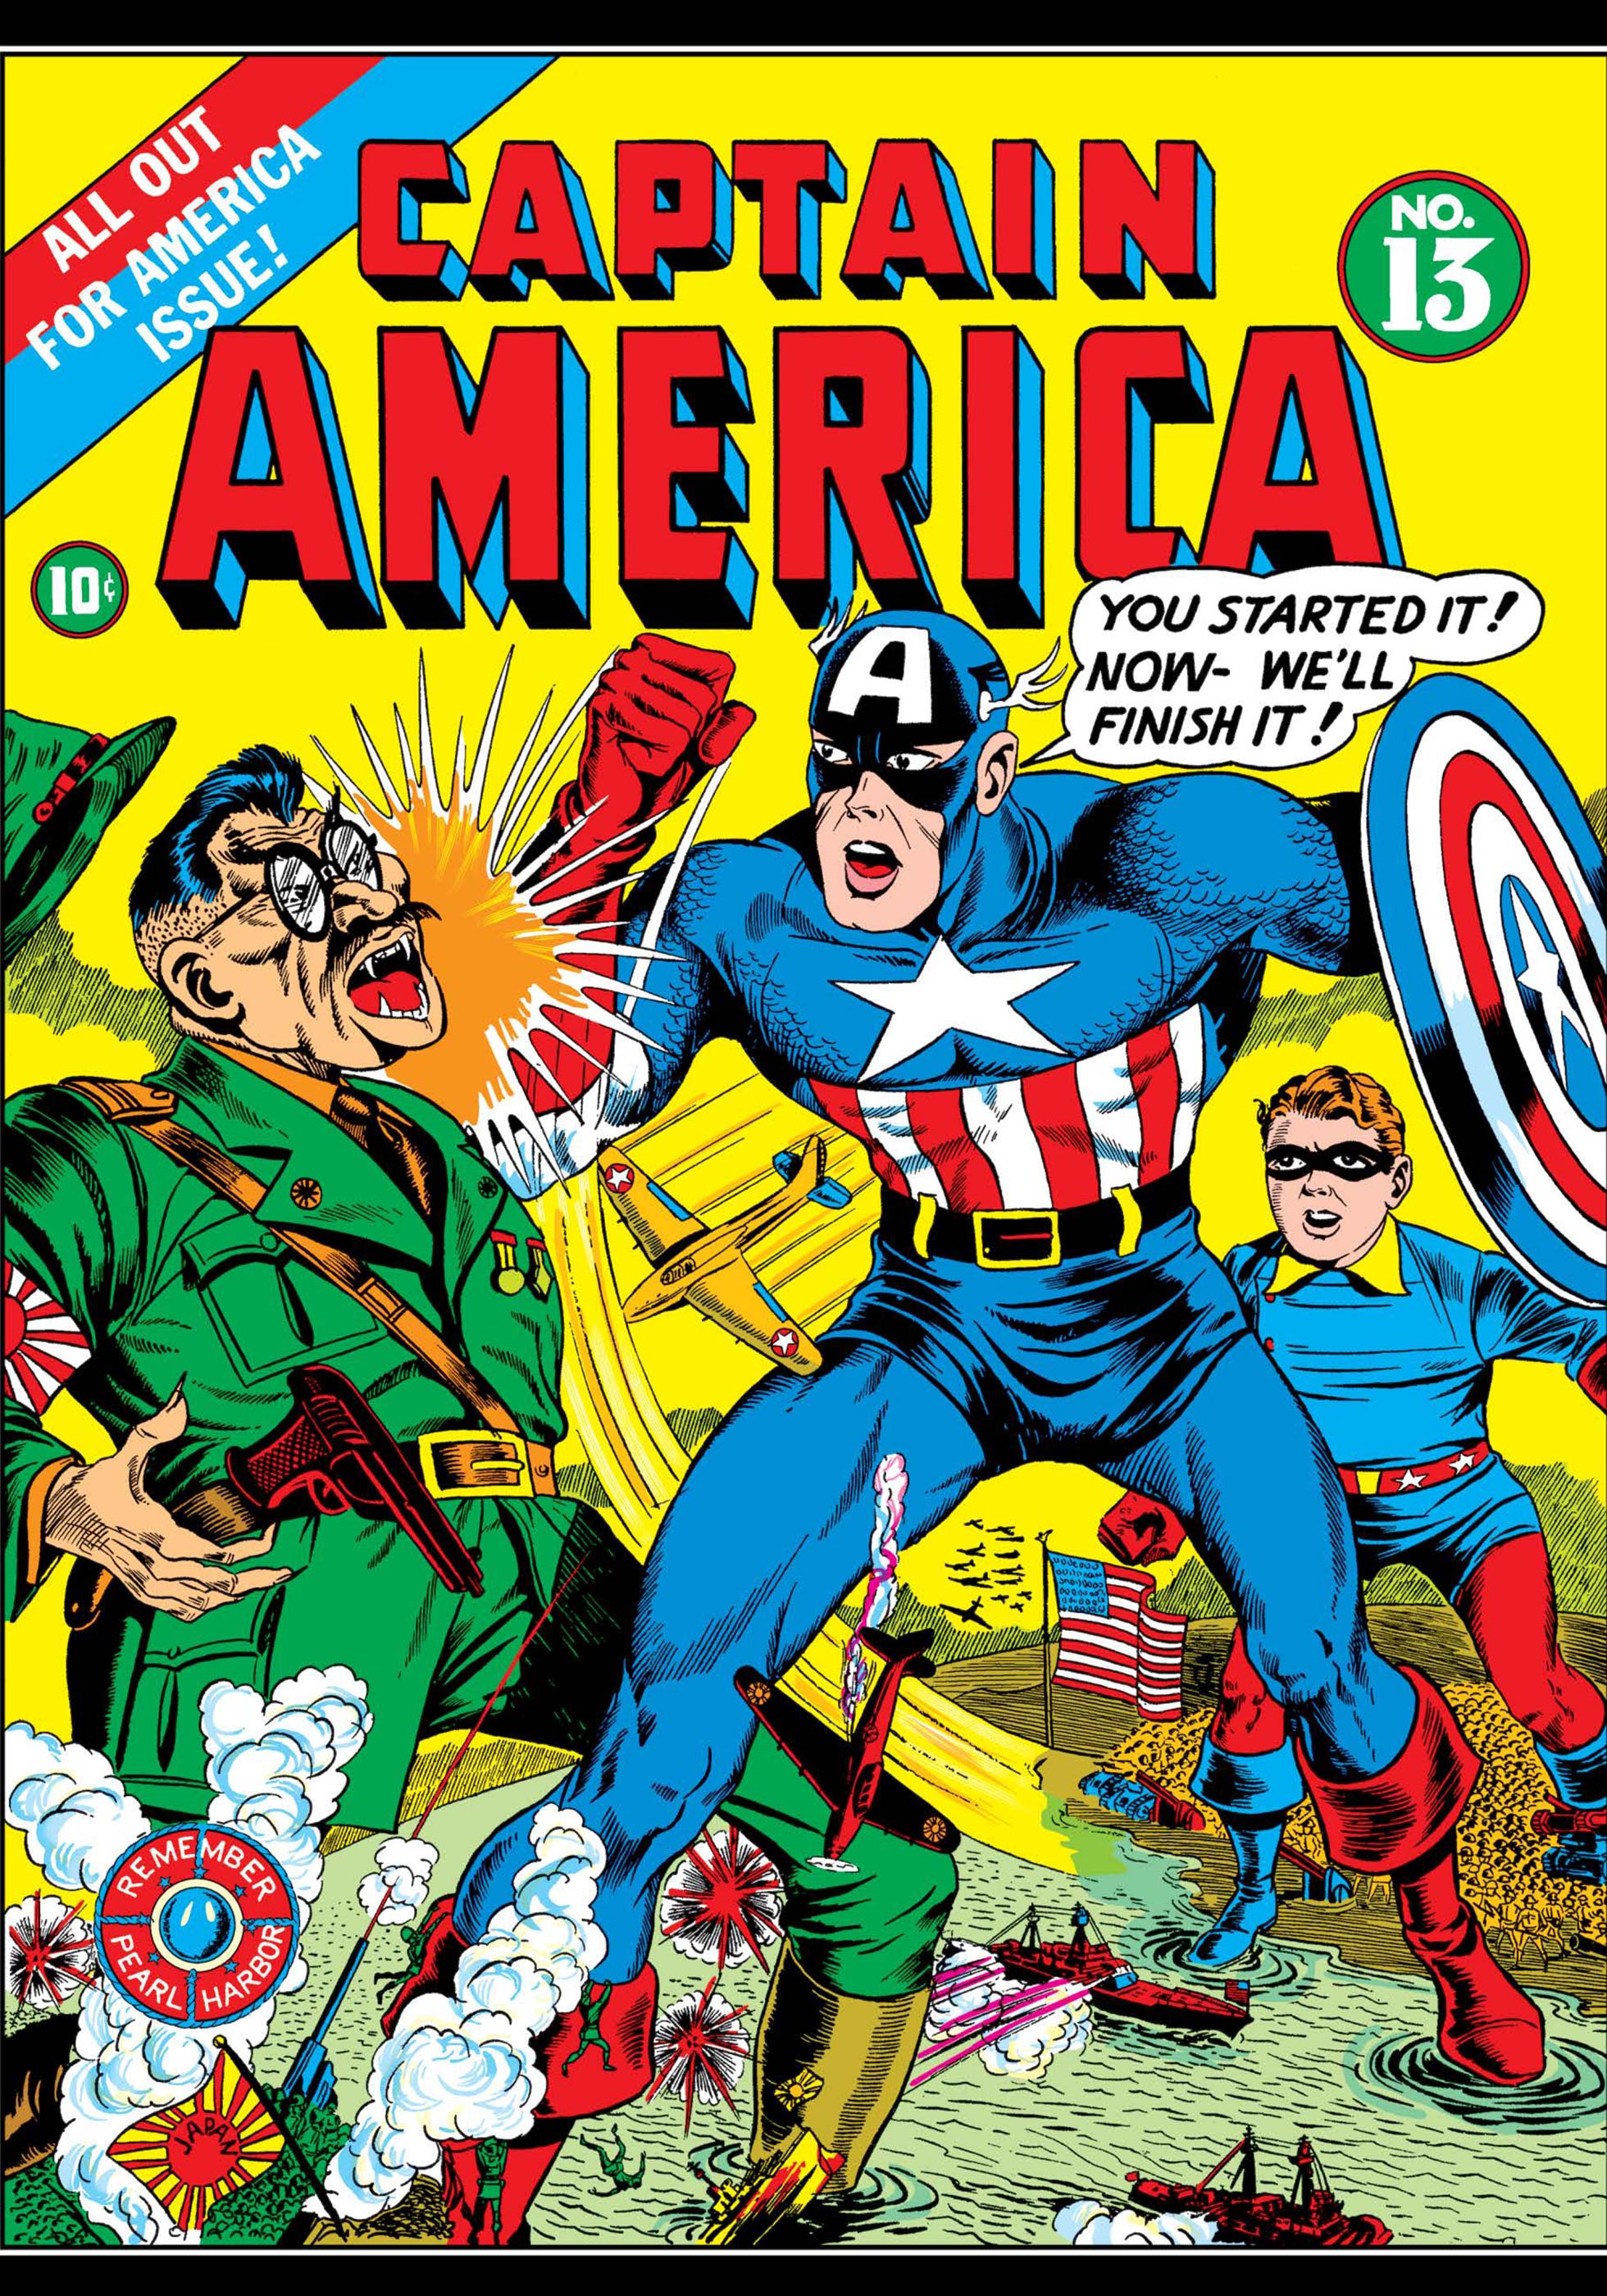 Captain America Comics (1941) #13